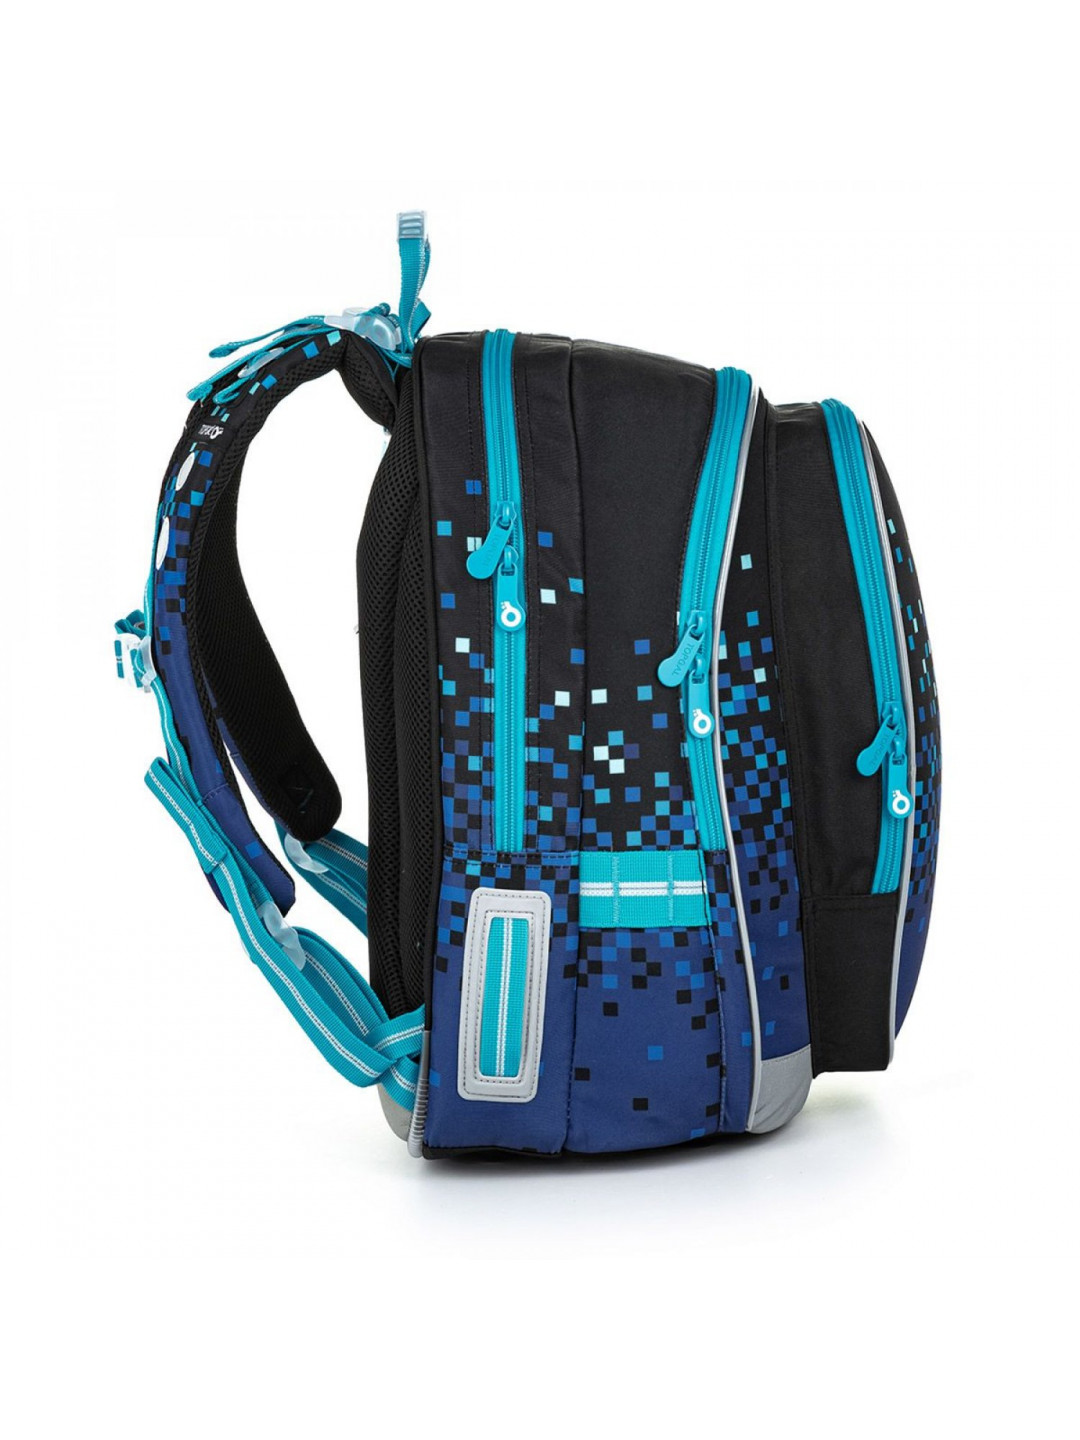 Dvoukomorový modrý školní batoh Topgal MIRA černo-modrá